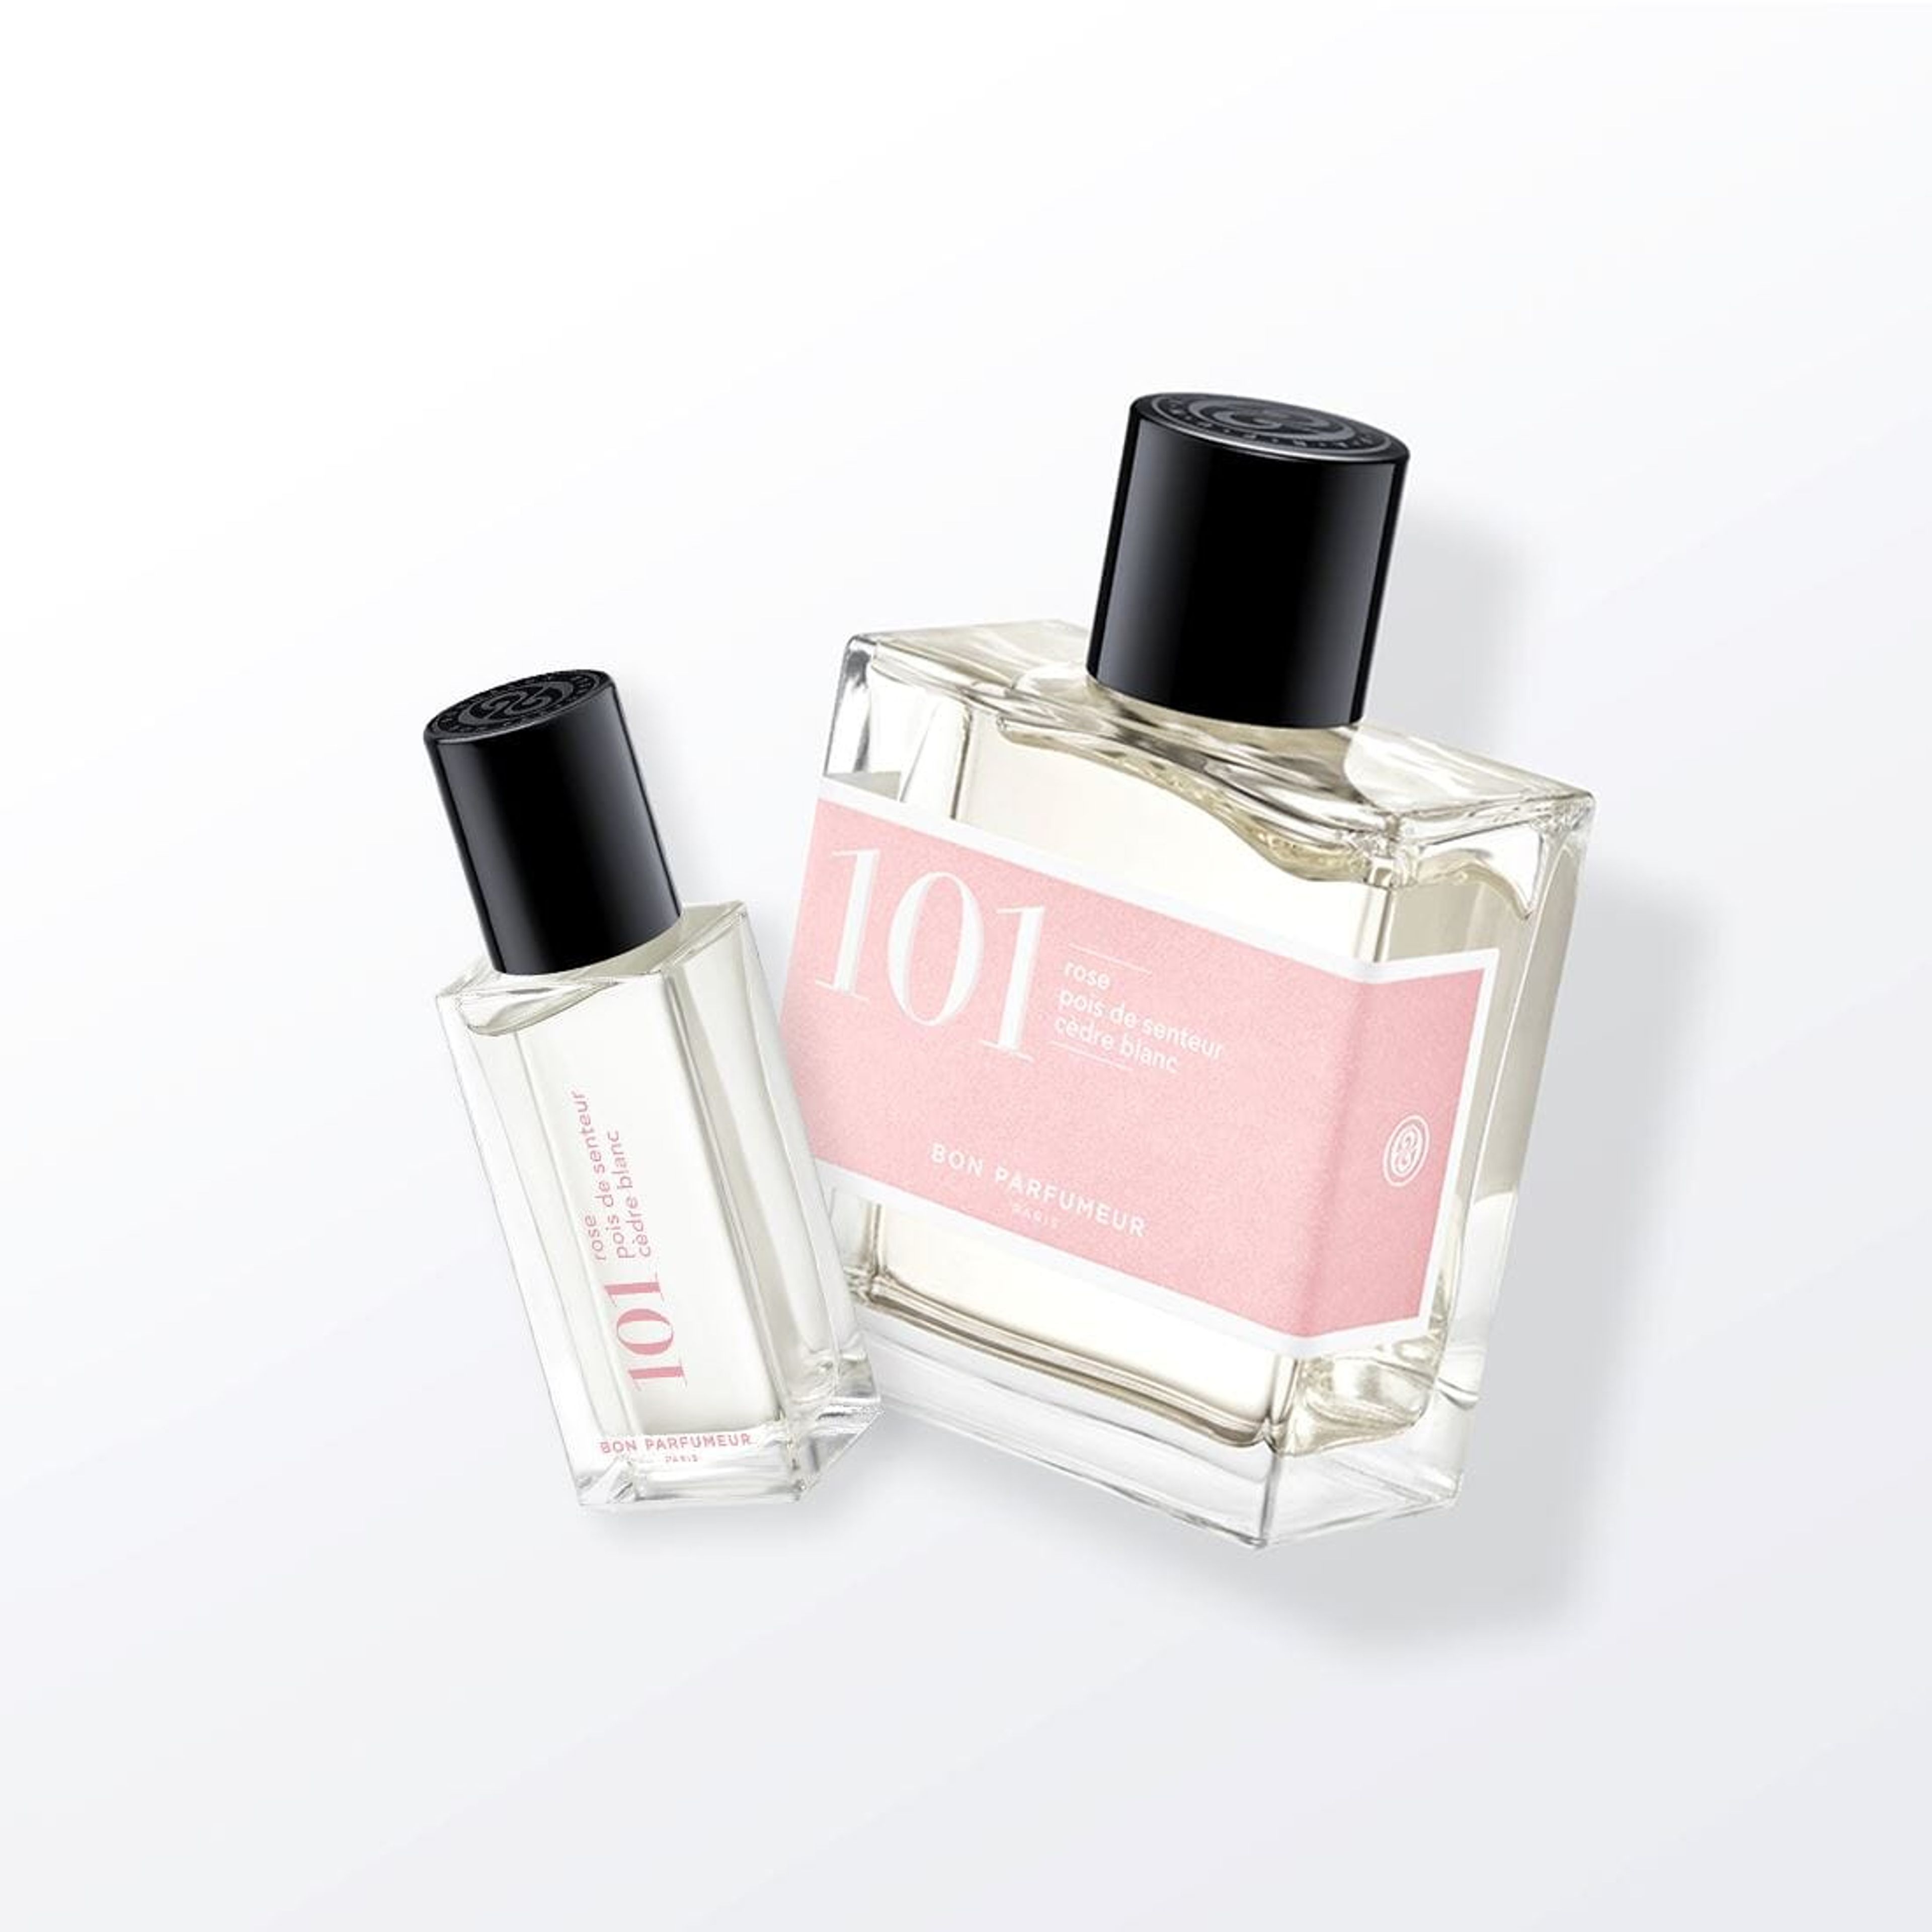 Eau de parfum 101 with rose, sweet pea and white cedar